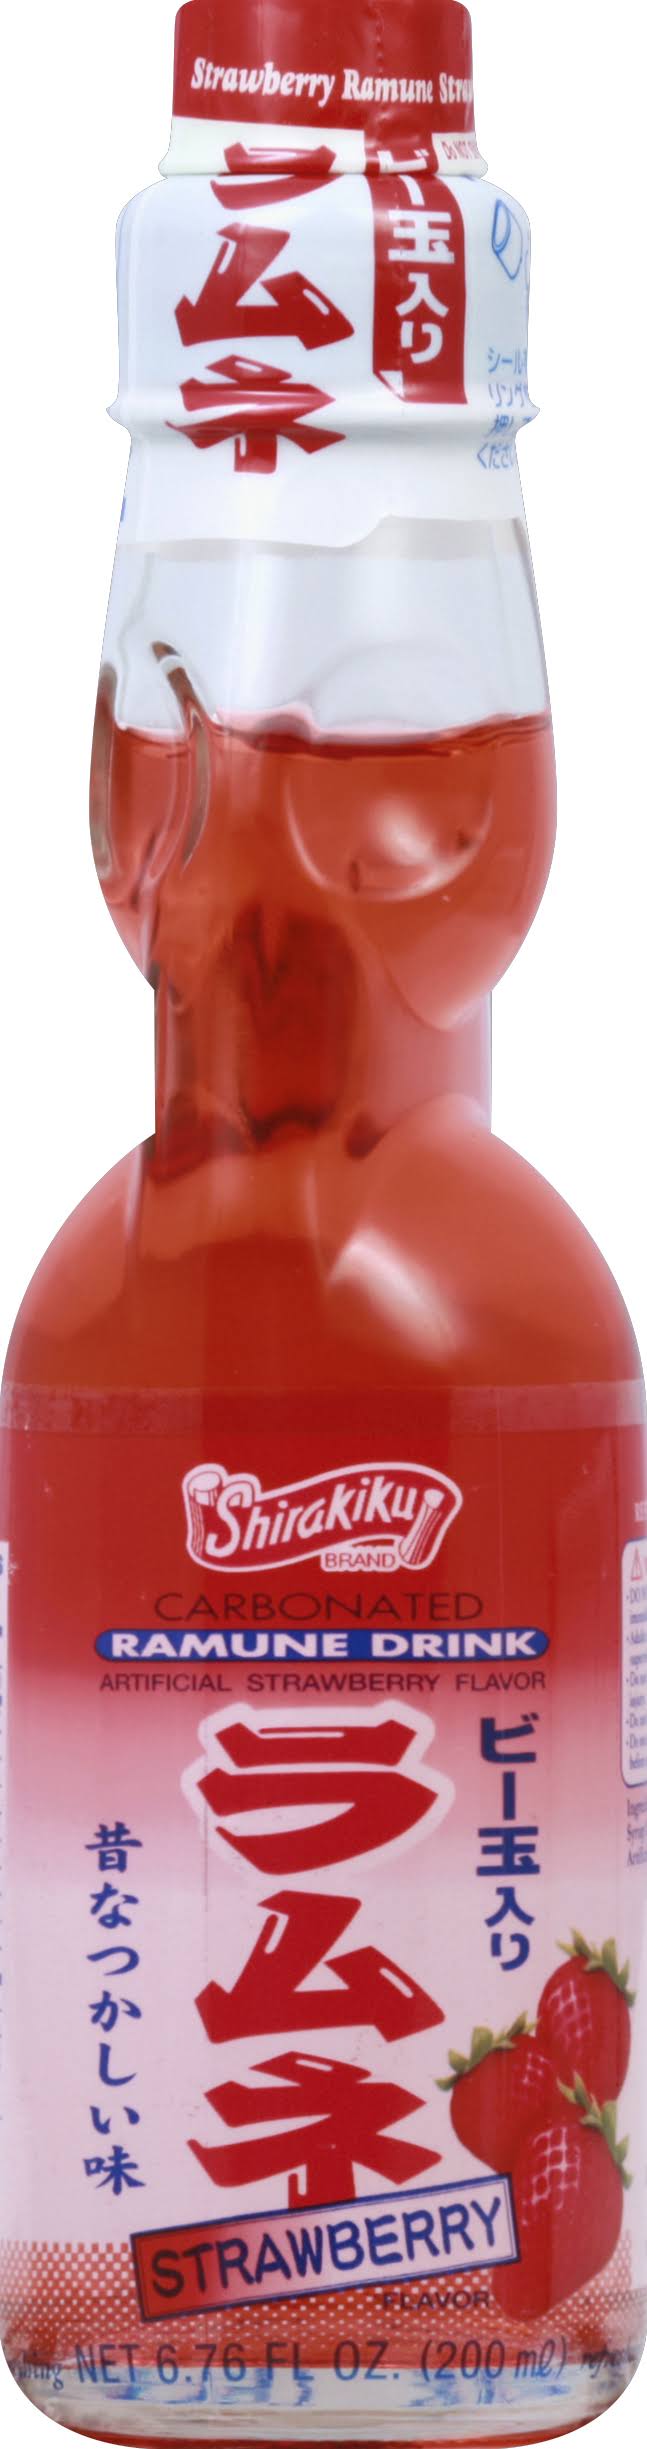 Shirakiku Ramune Carbonated Soft Drink - Strawberry, 200ml